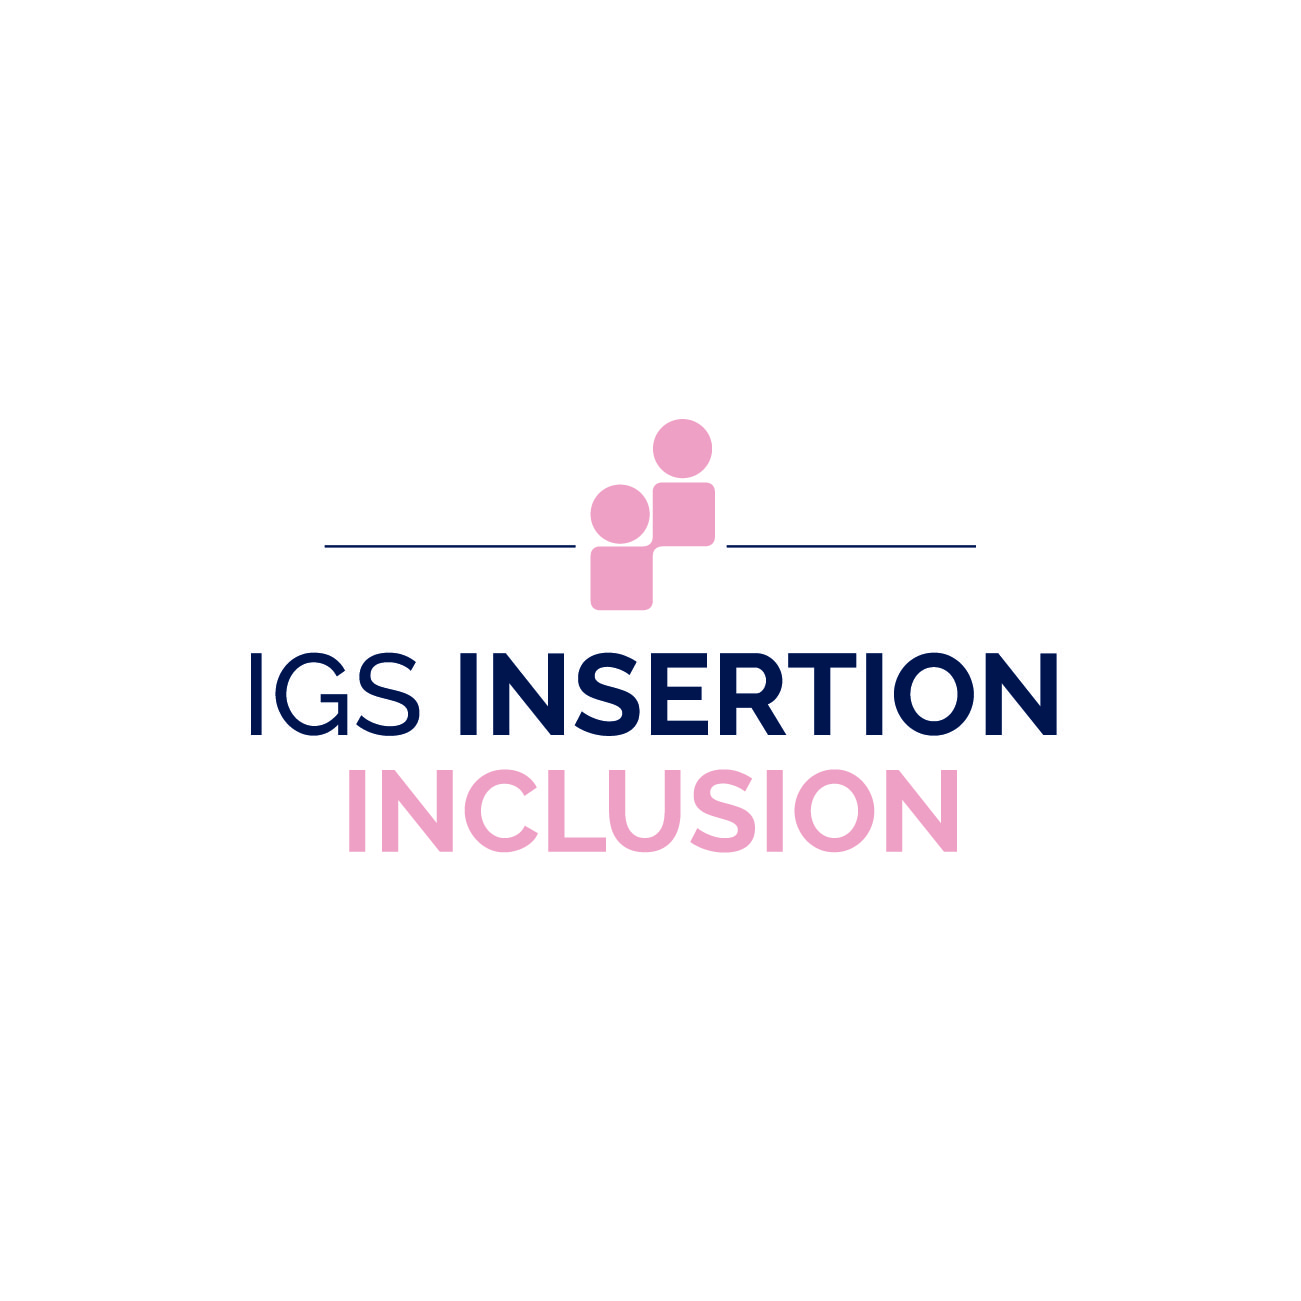 IGS INSERTION INCLUSION